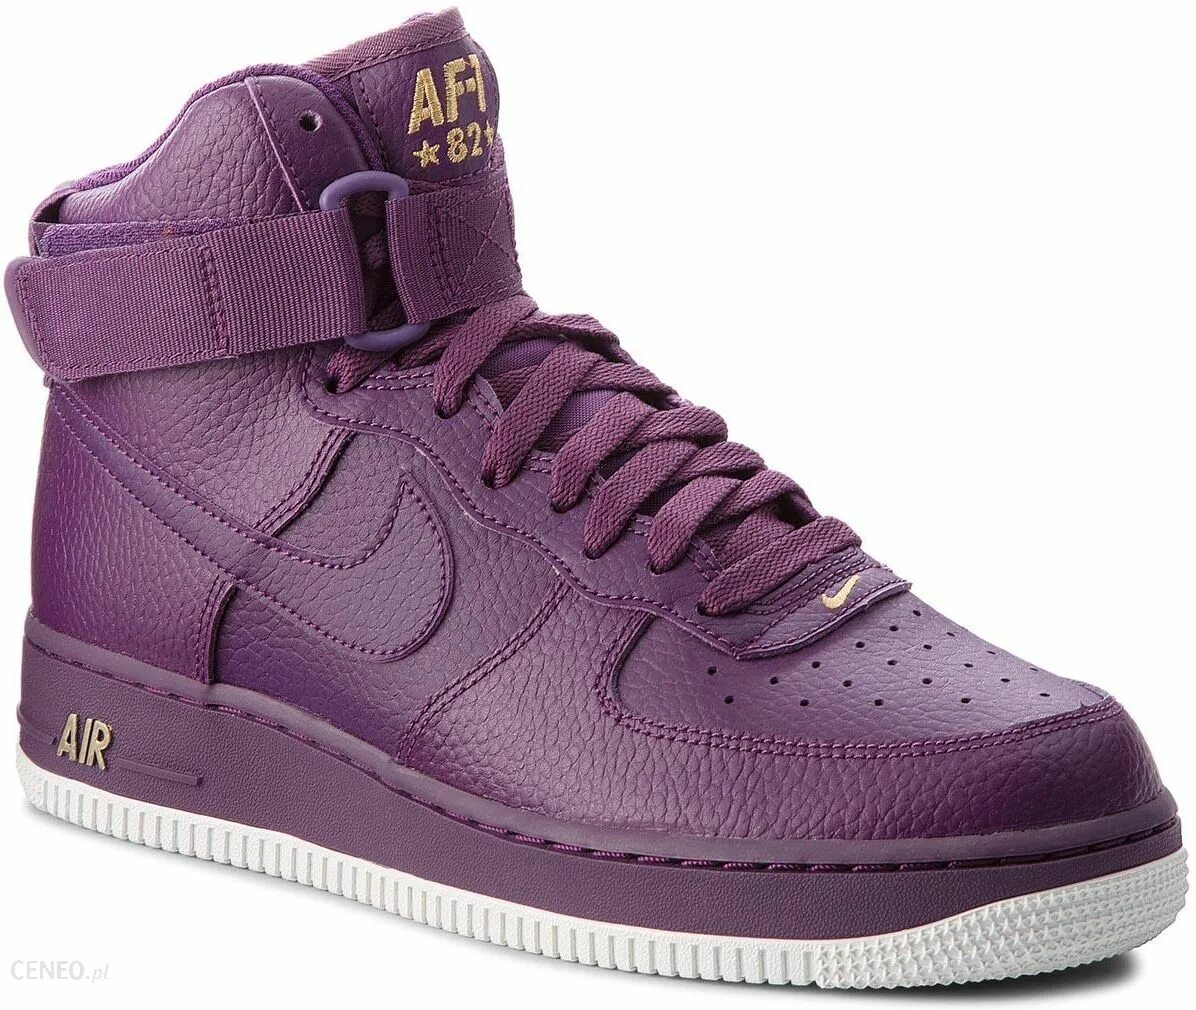 Nike Air Force 1 High Purple. Nike Air Force 1 High фиолетовые. Найк Форс 1 Purple. Nike Air Air Force 1 фиолетовые. Purple air купить